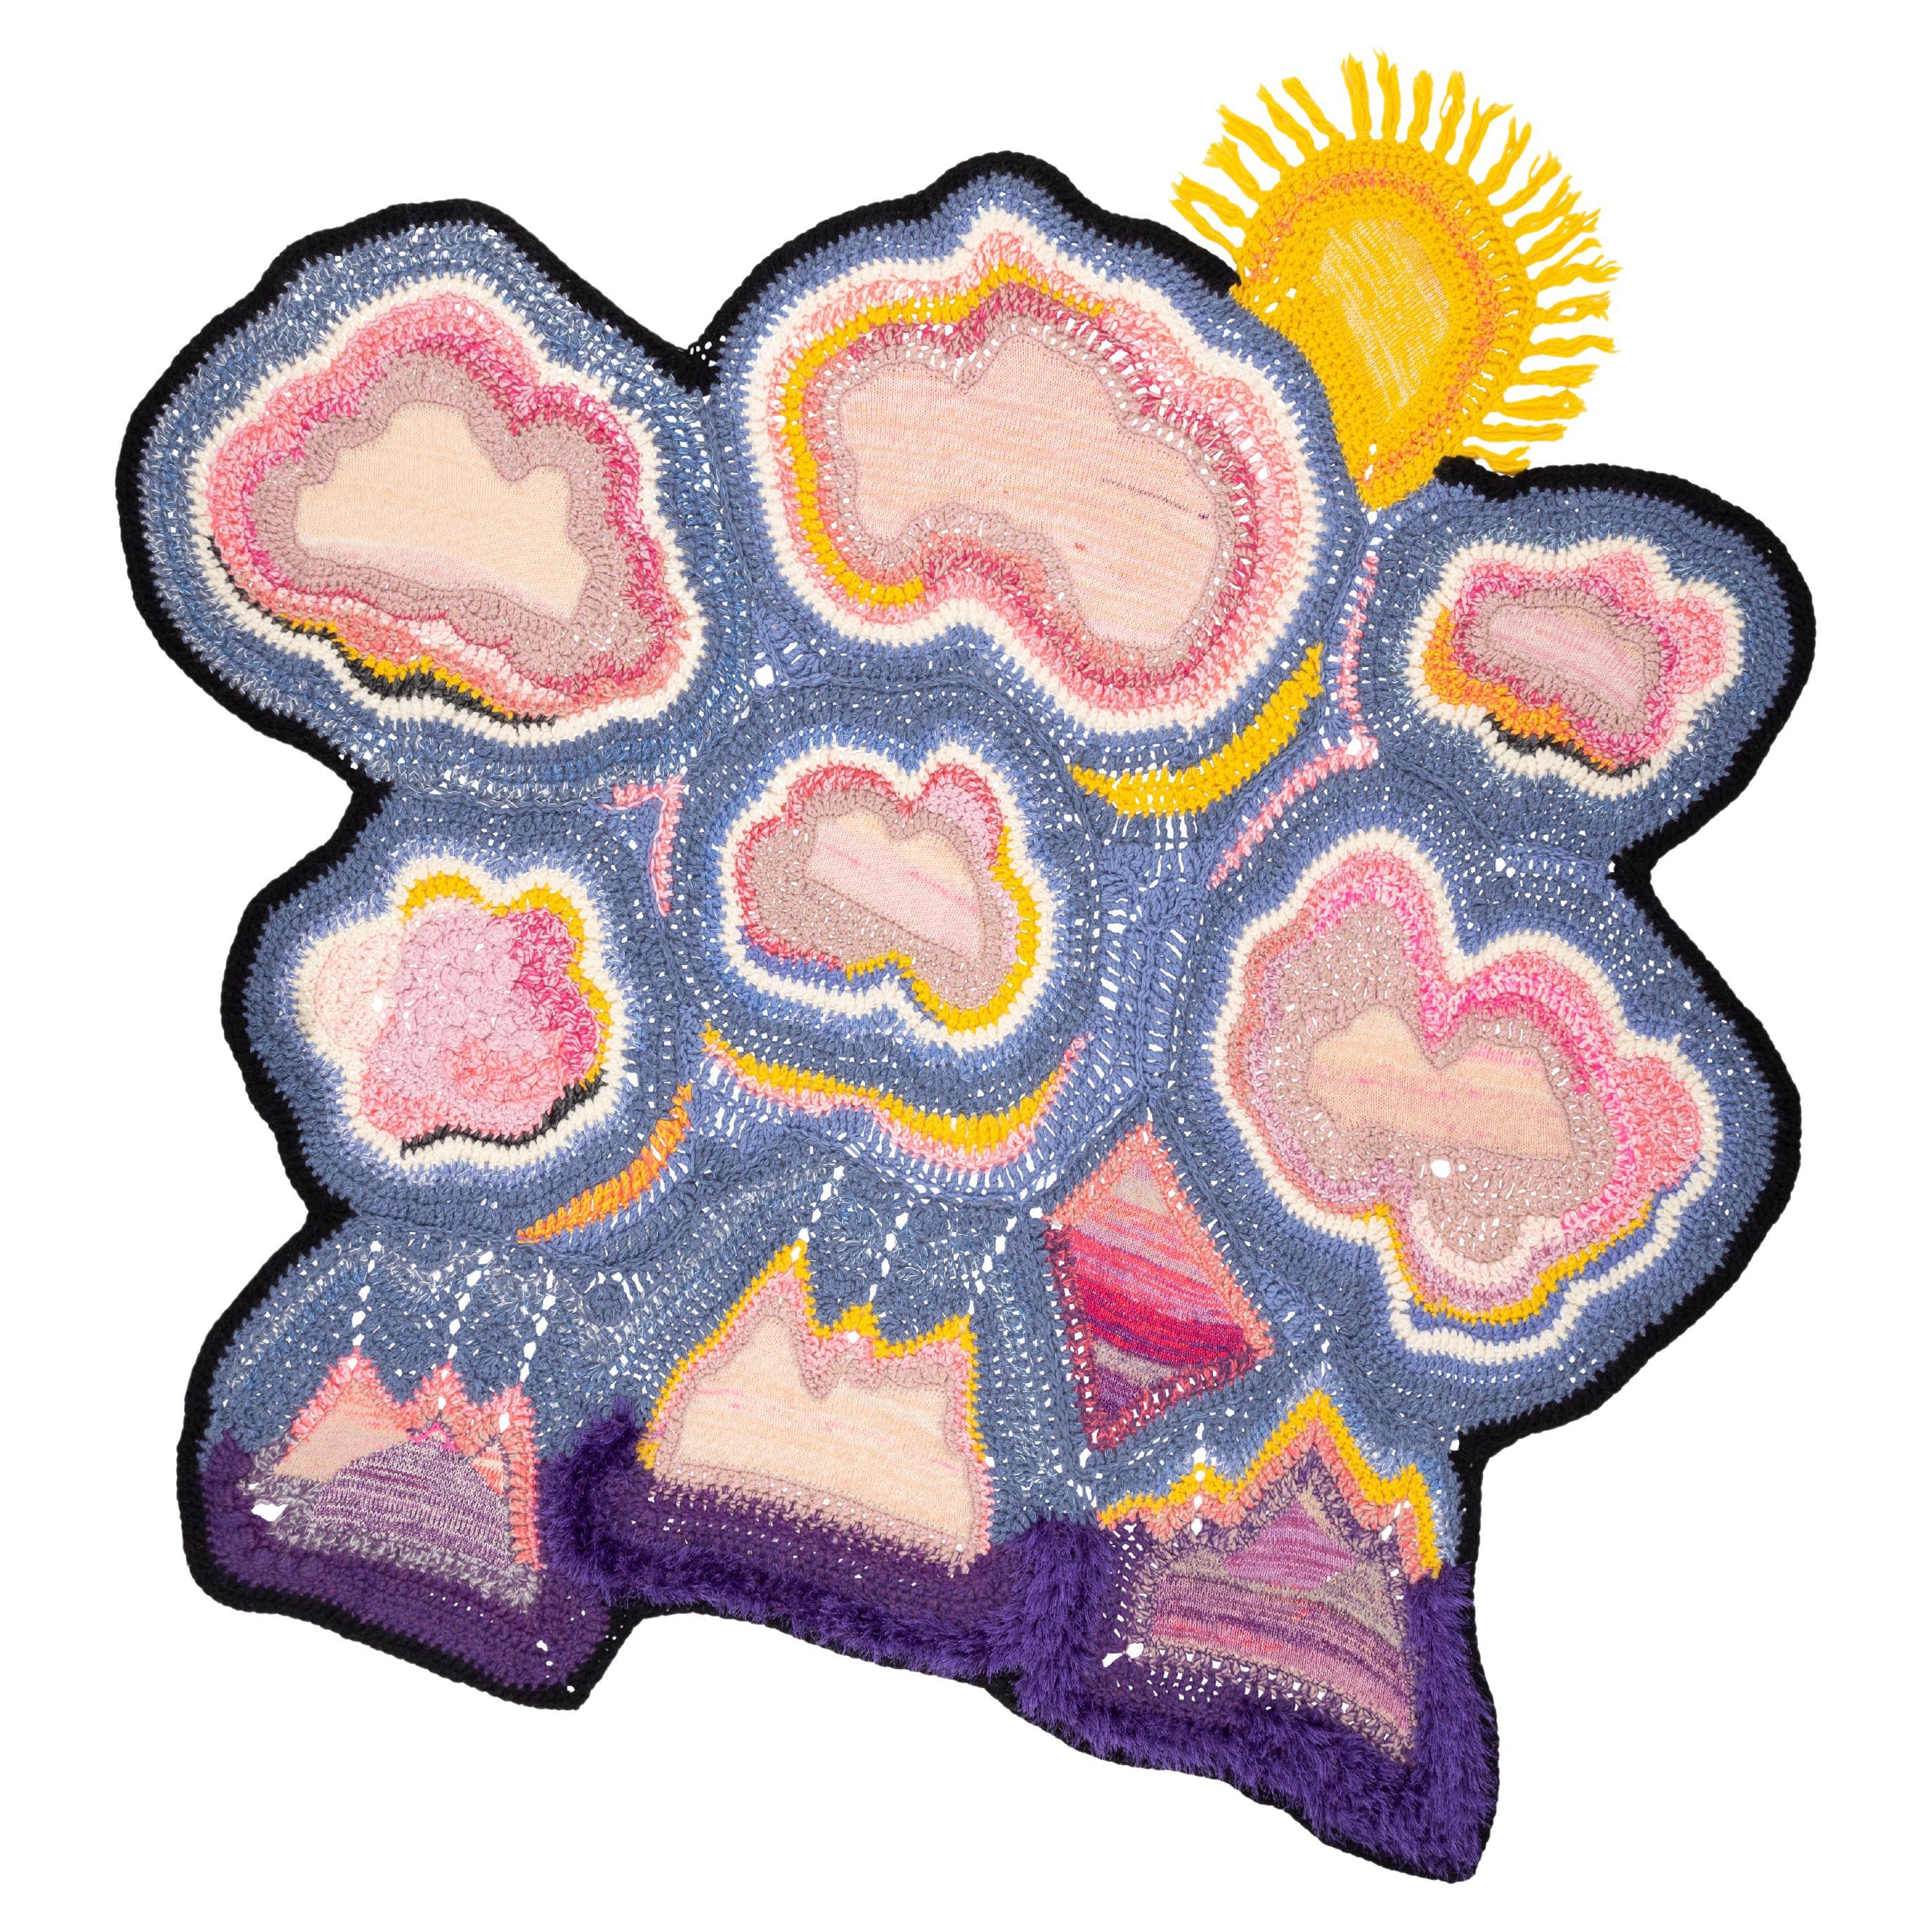 „Sunrise“ Handgefertigtes mehrfarbiges Wandbehang aus Strick/Crochet mit Himmelslandschaft